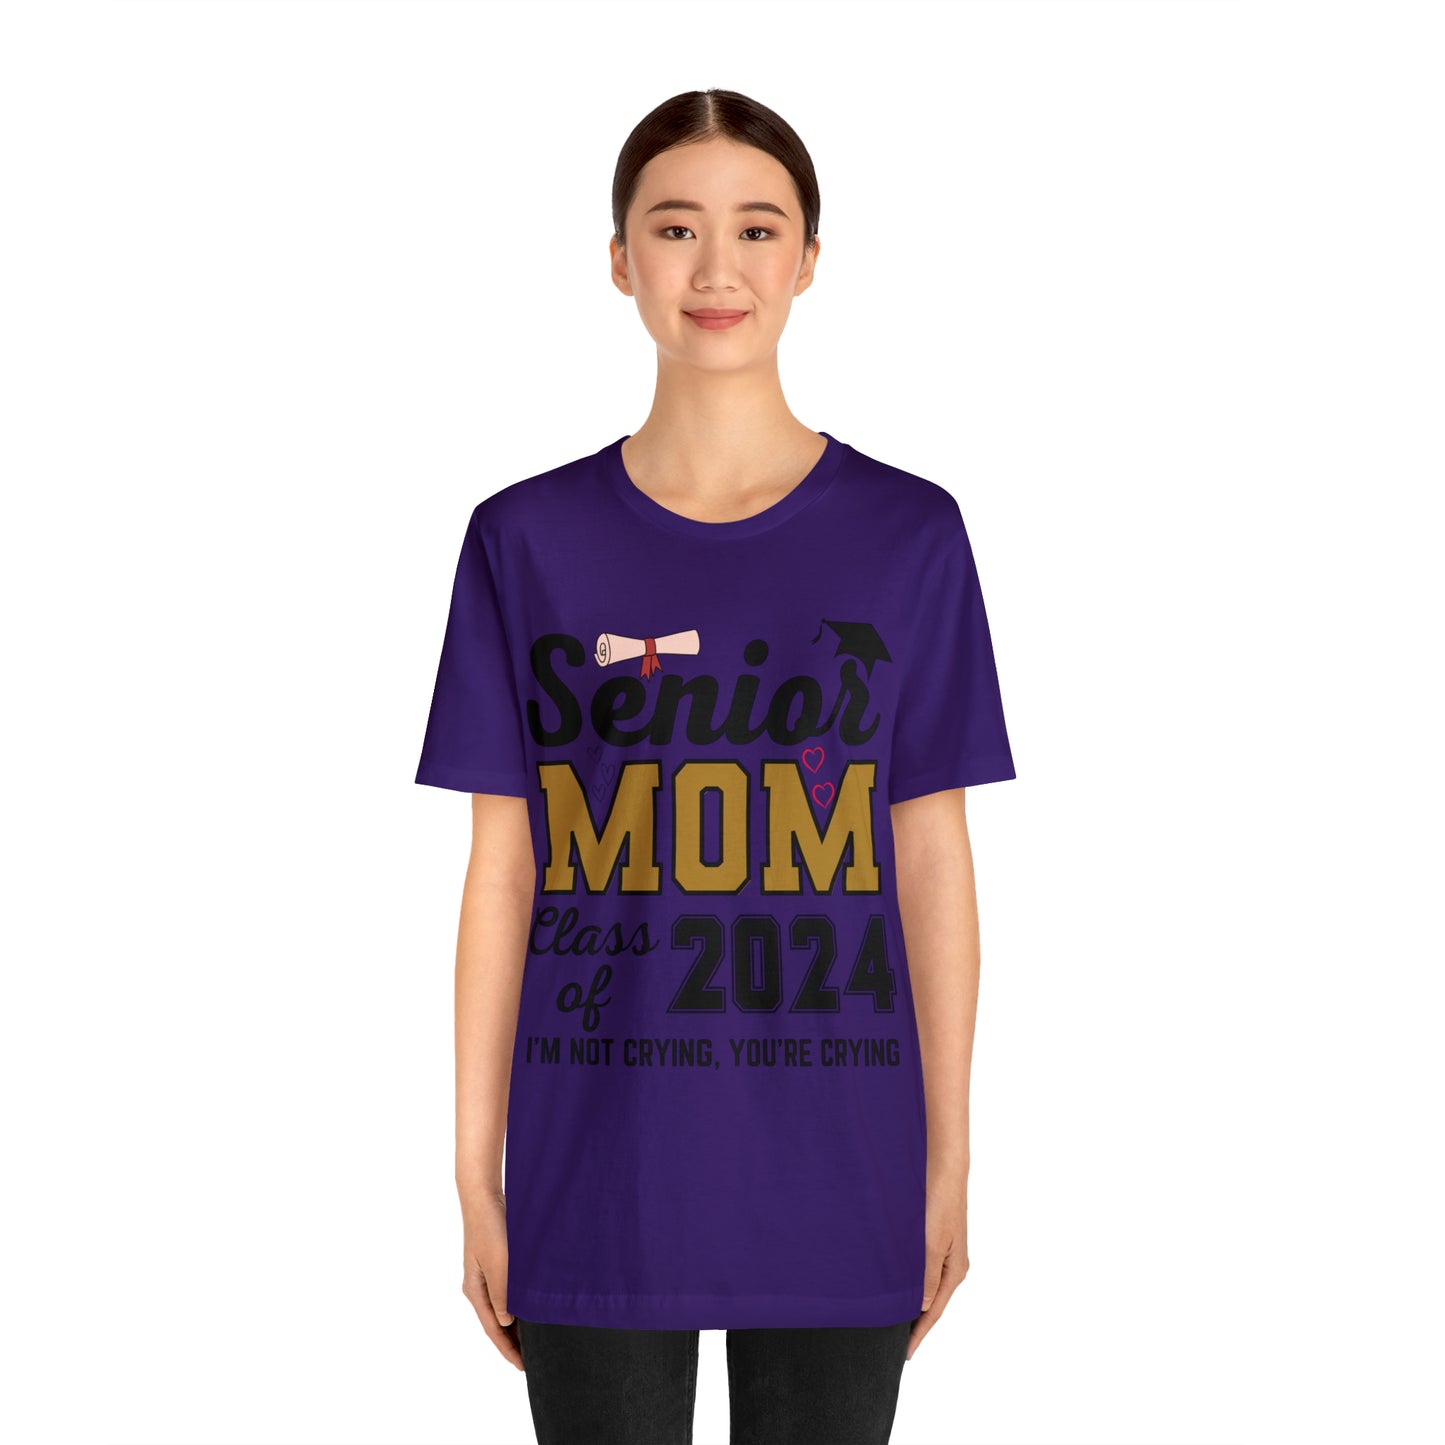 Proud Senior Mom Class of 2024 T-Shirt, Proud Senior Mom Shirt, Gift for Graduate, Graduation 2024 Family Shirt 2024 Senior Mom